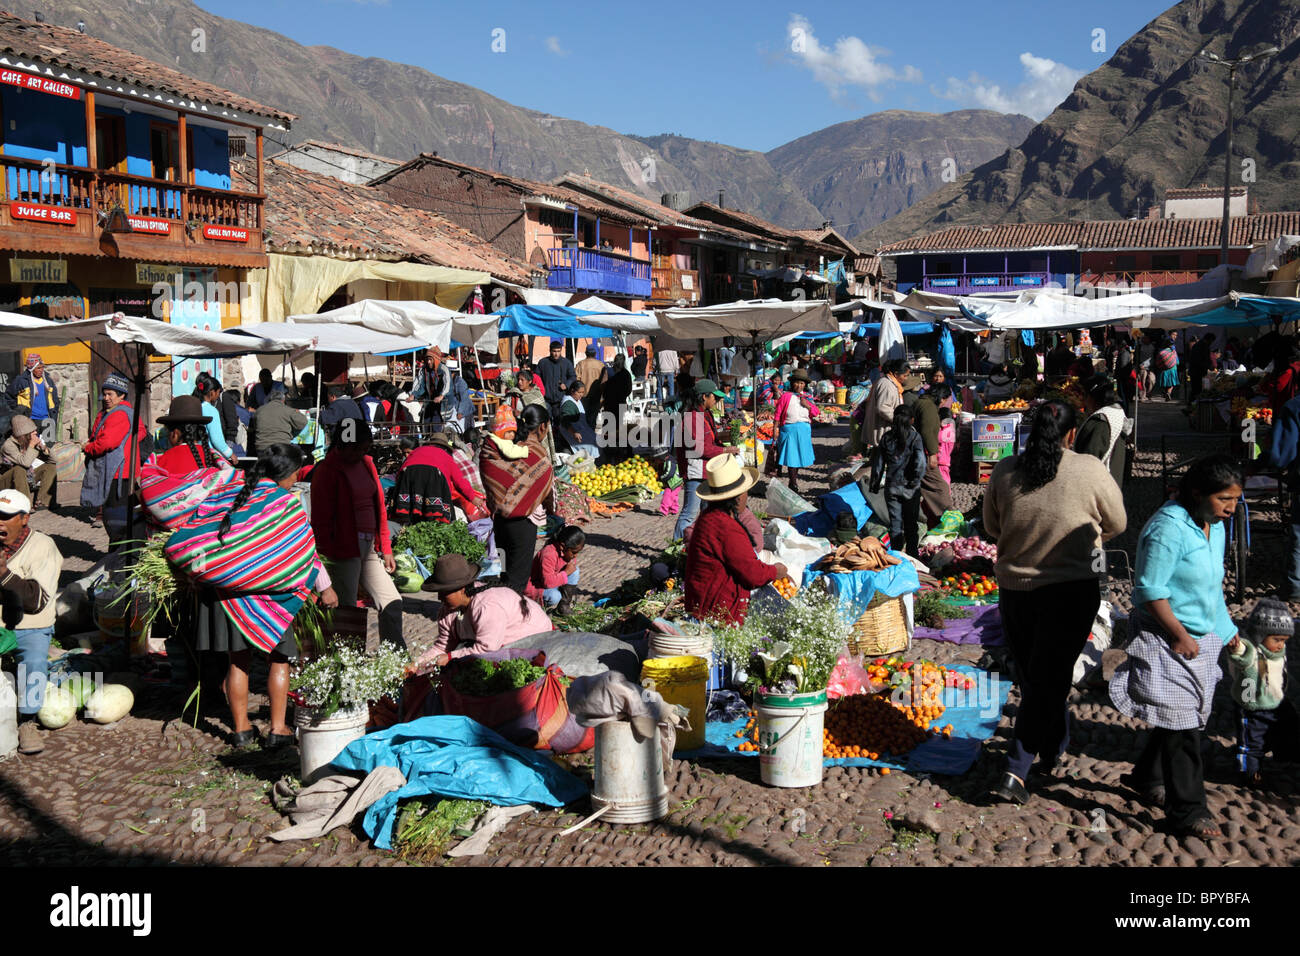 Vista sulle bancarelle a Pisac Market , Valle Sacra , Perù Foto Stock